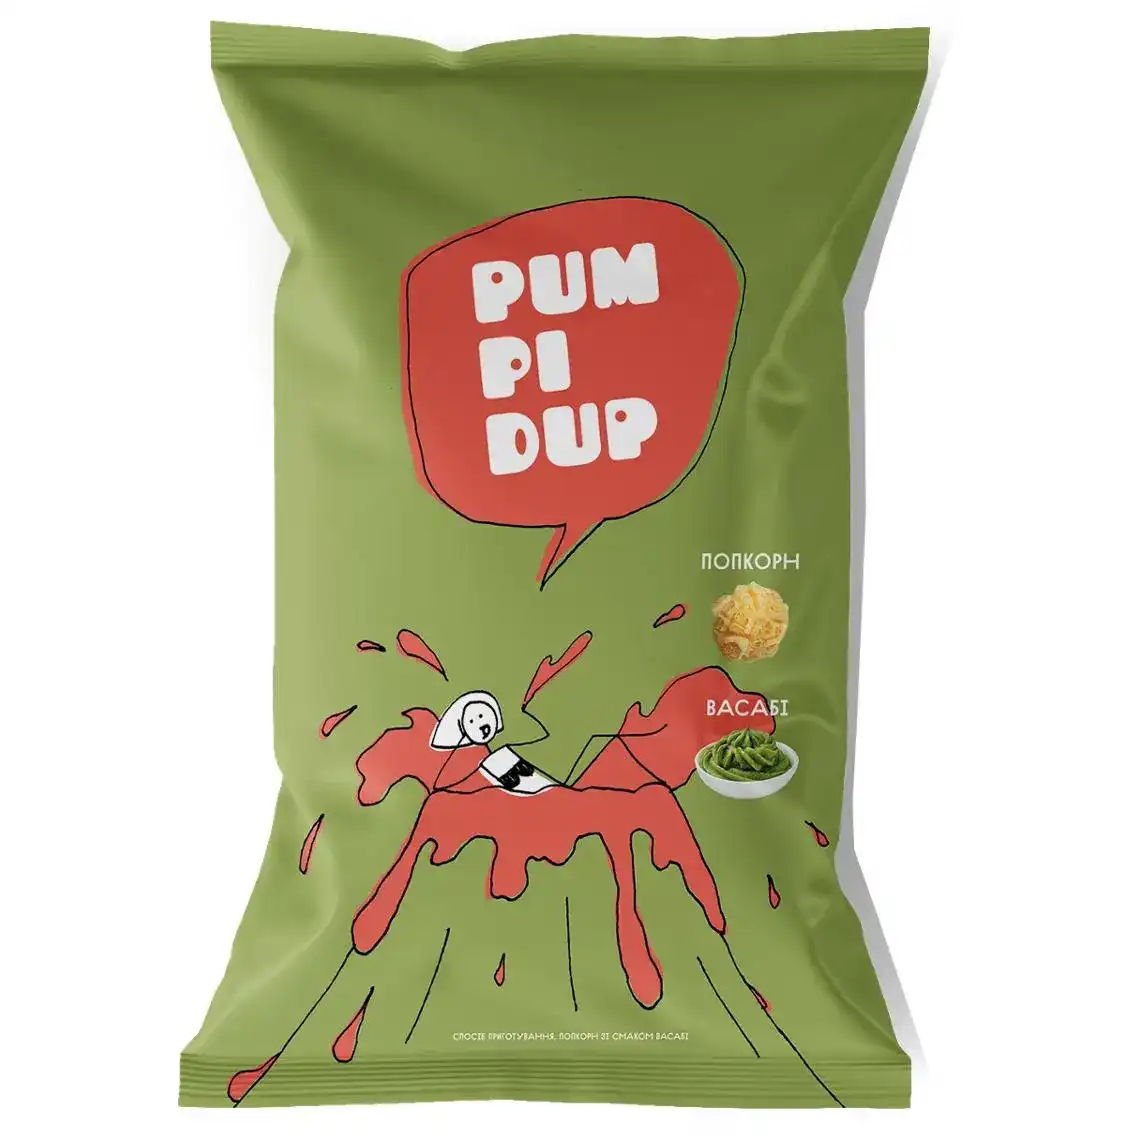 Попкорн Pumpidup со вкусом васаби 90 г